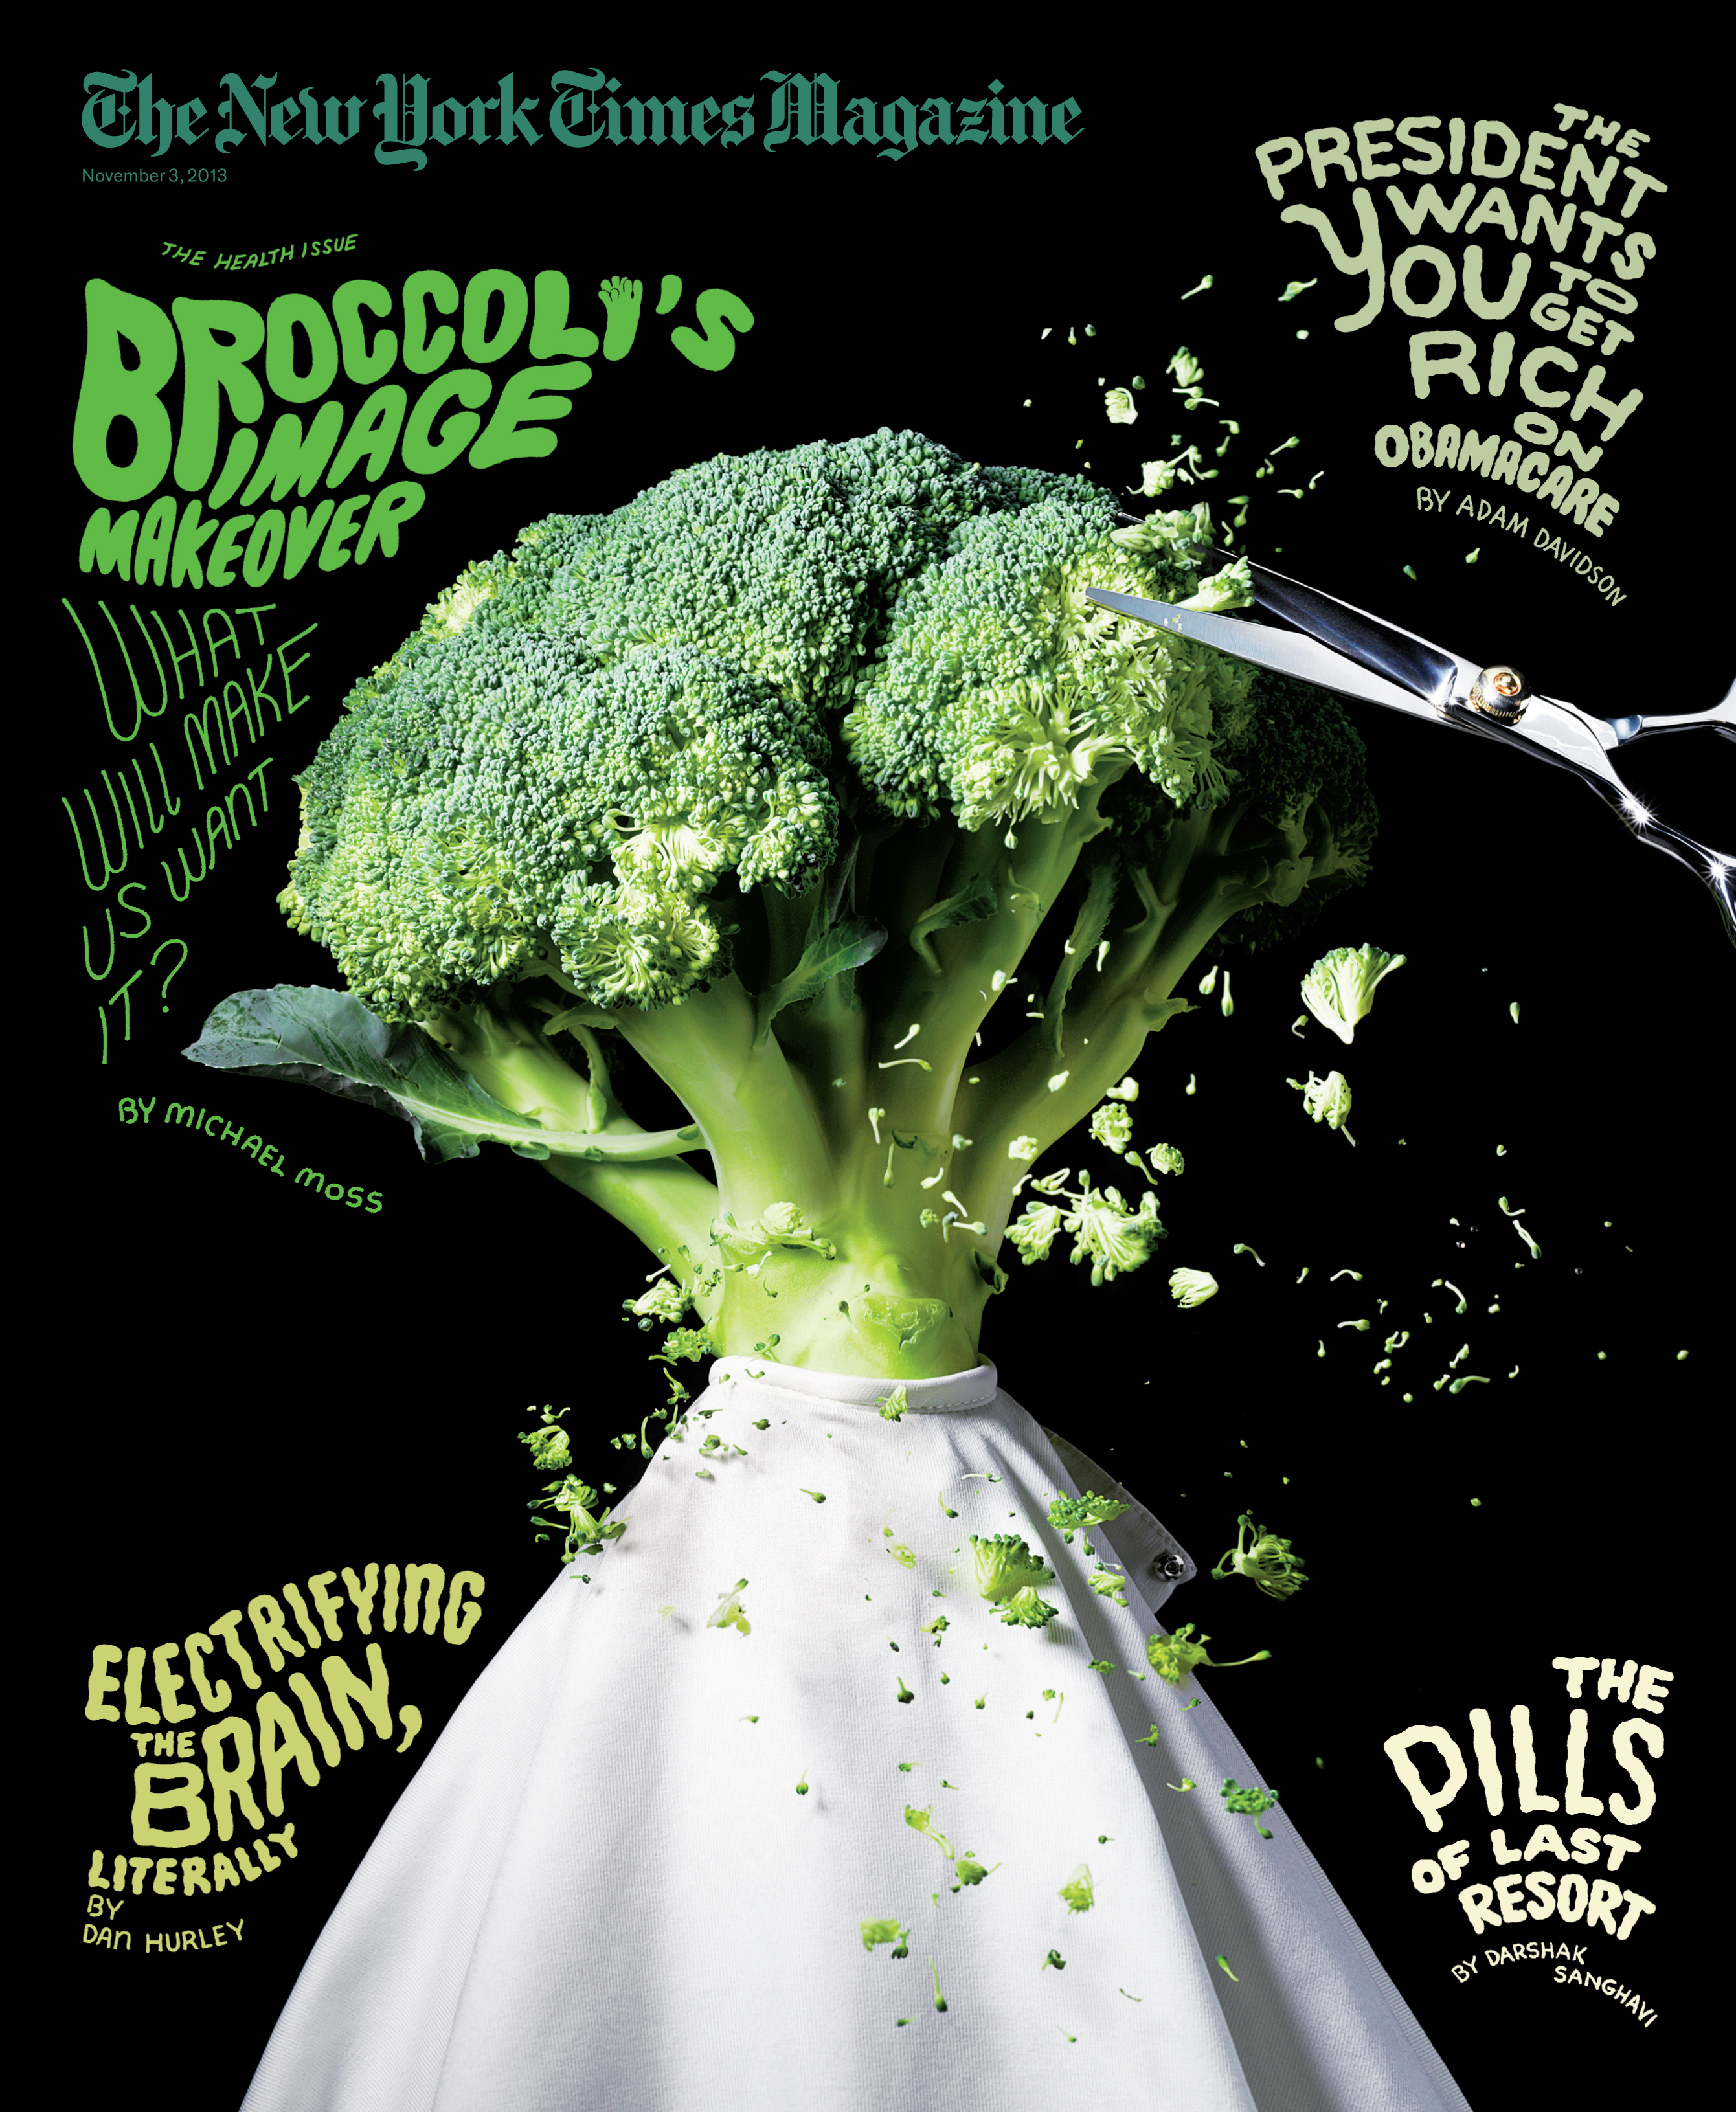 The New York Times Magazine-November 3, "Broccoli's Image Makeover"